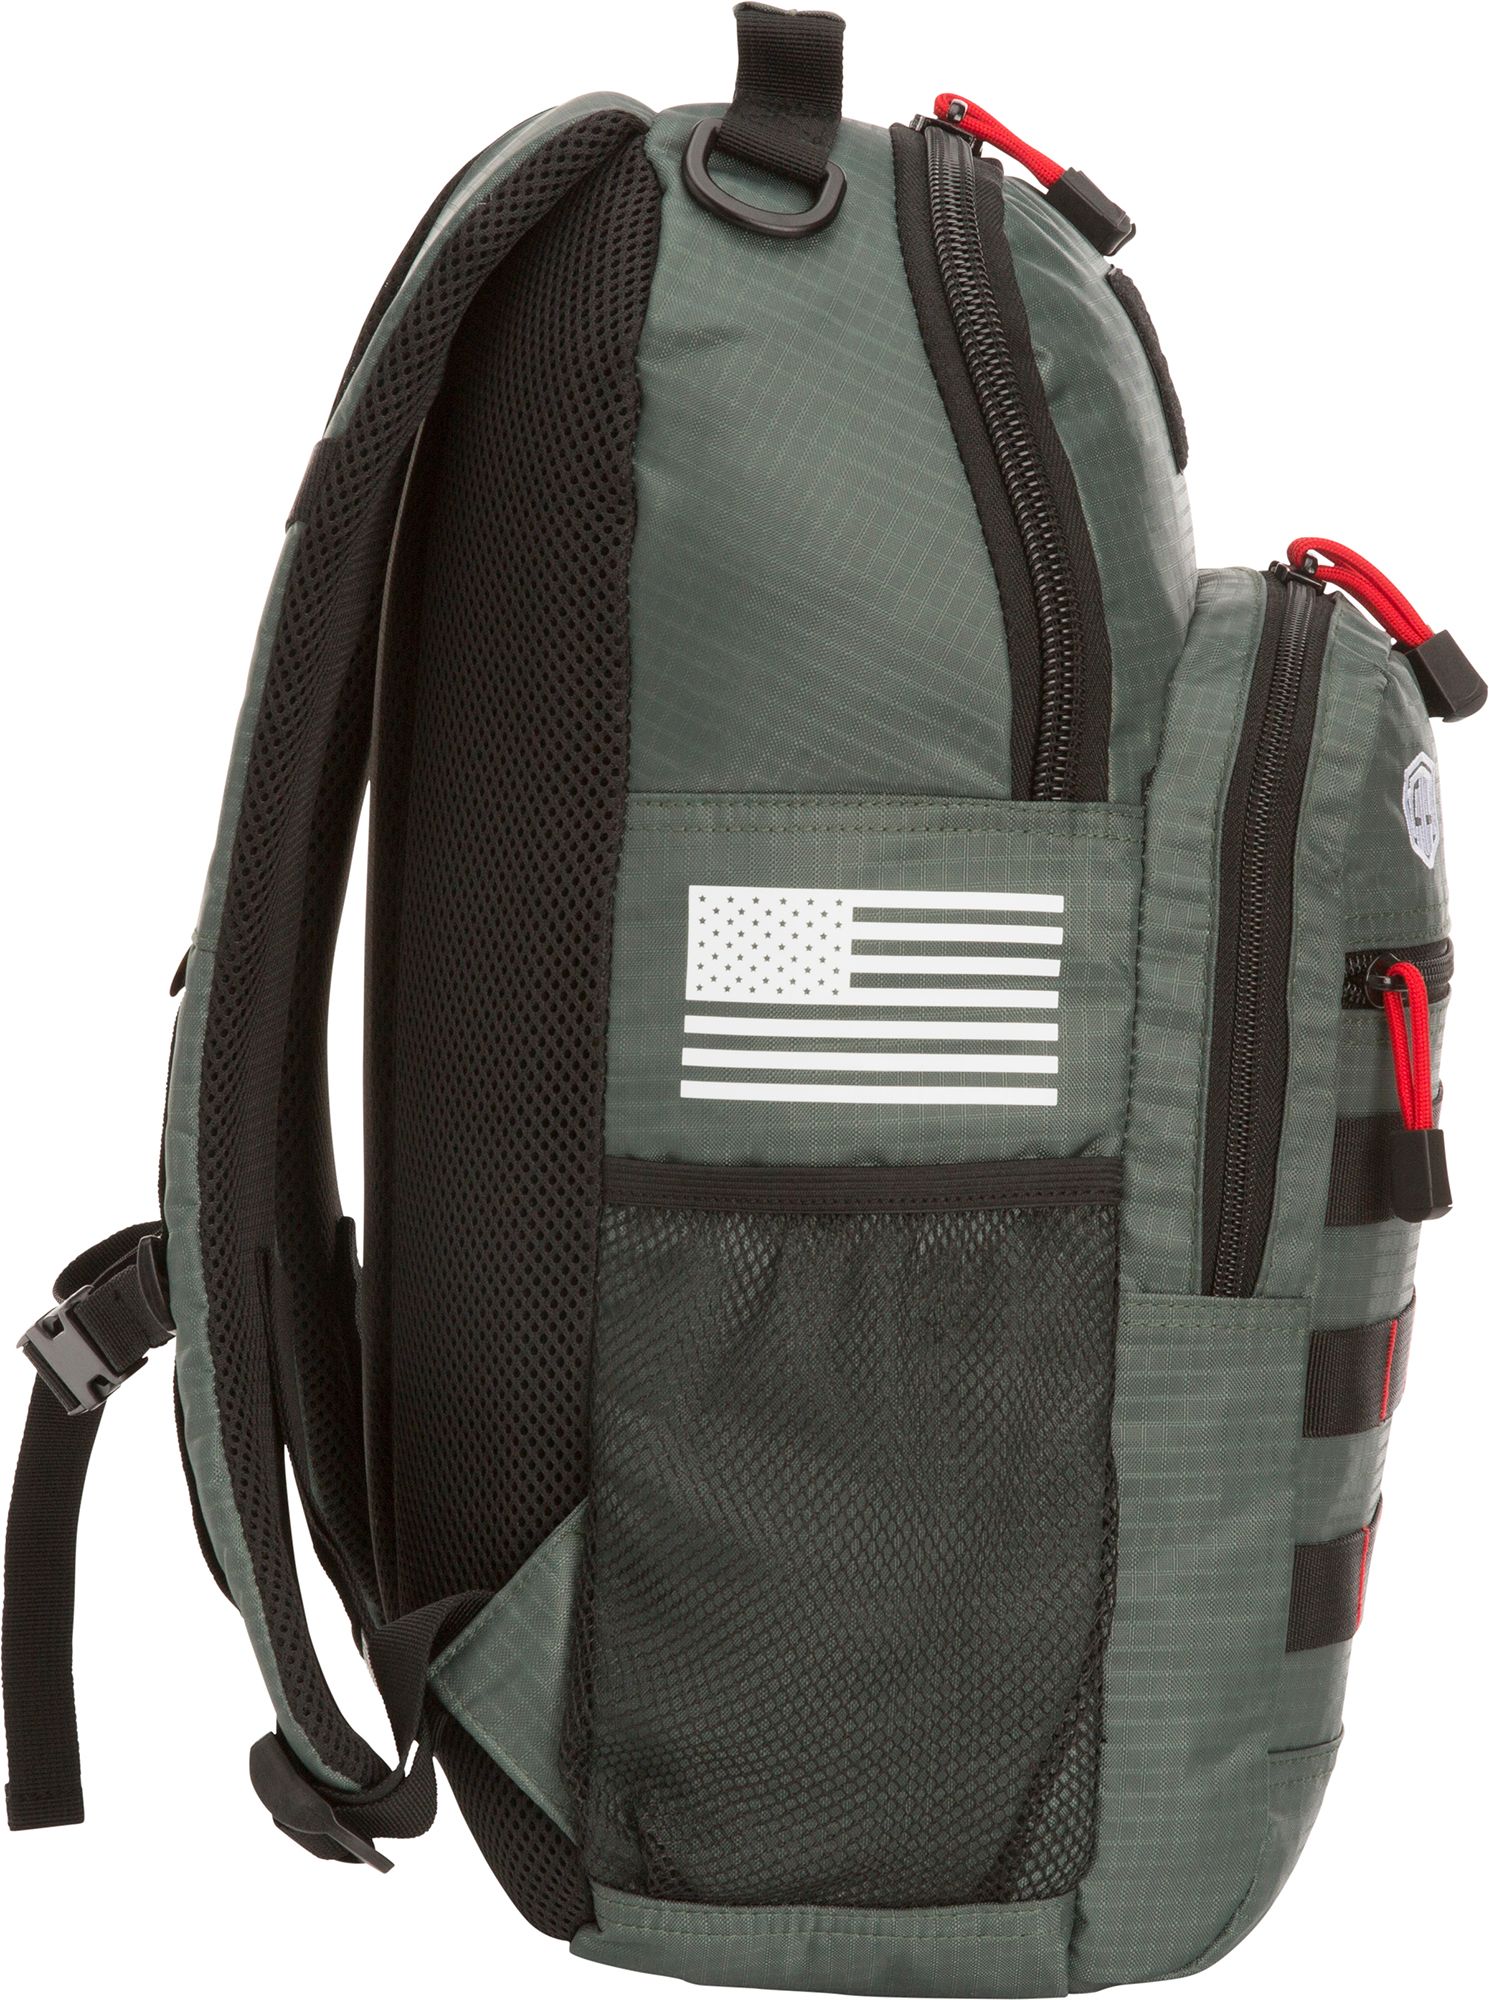 Dick's Sporting Goods Lew's American Hero 3700 Tackle Backpack